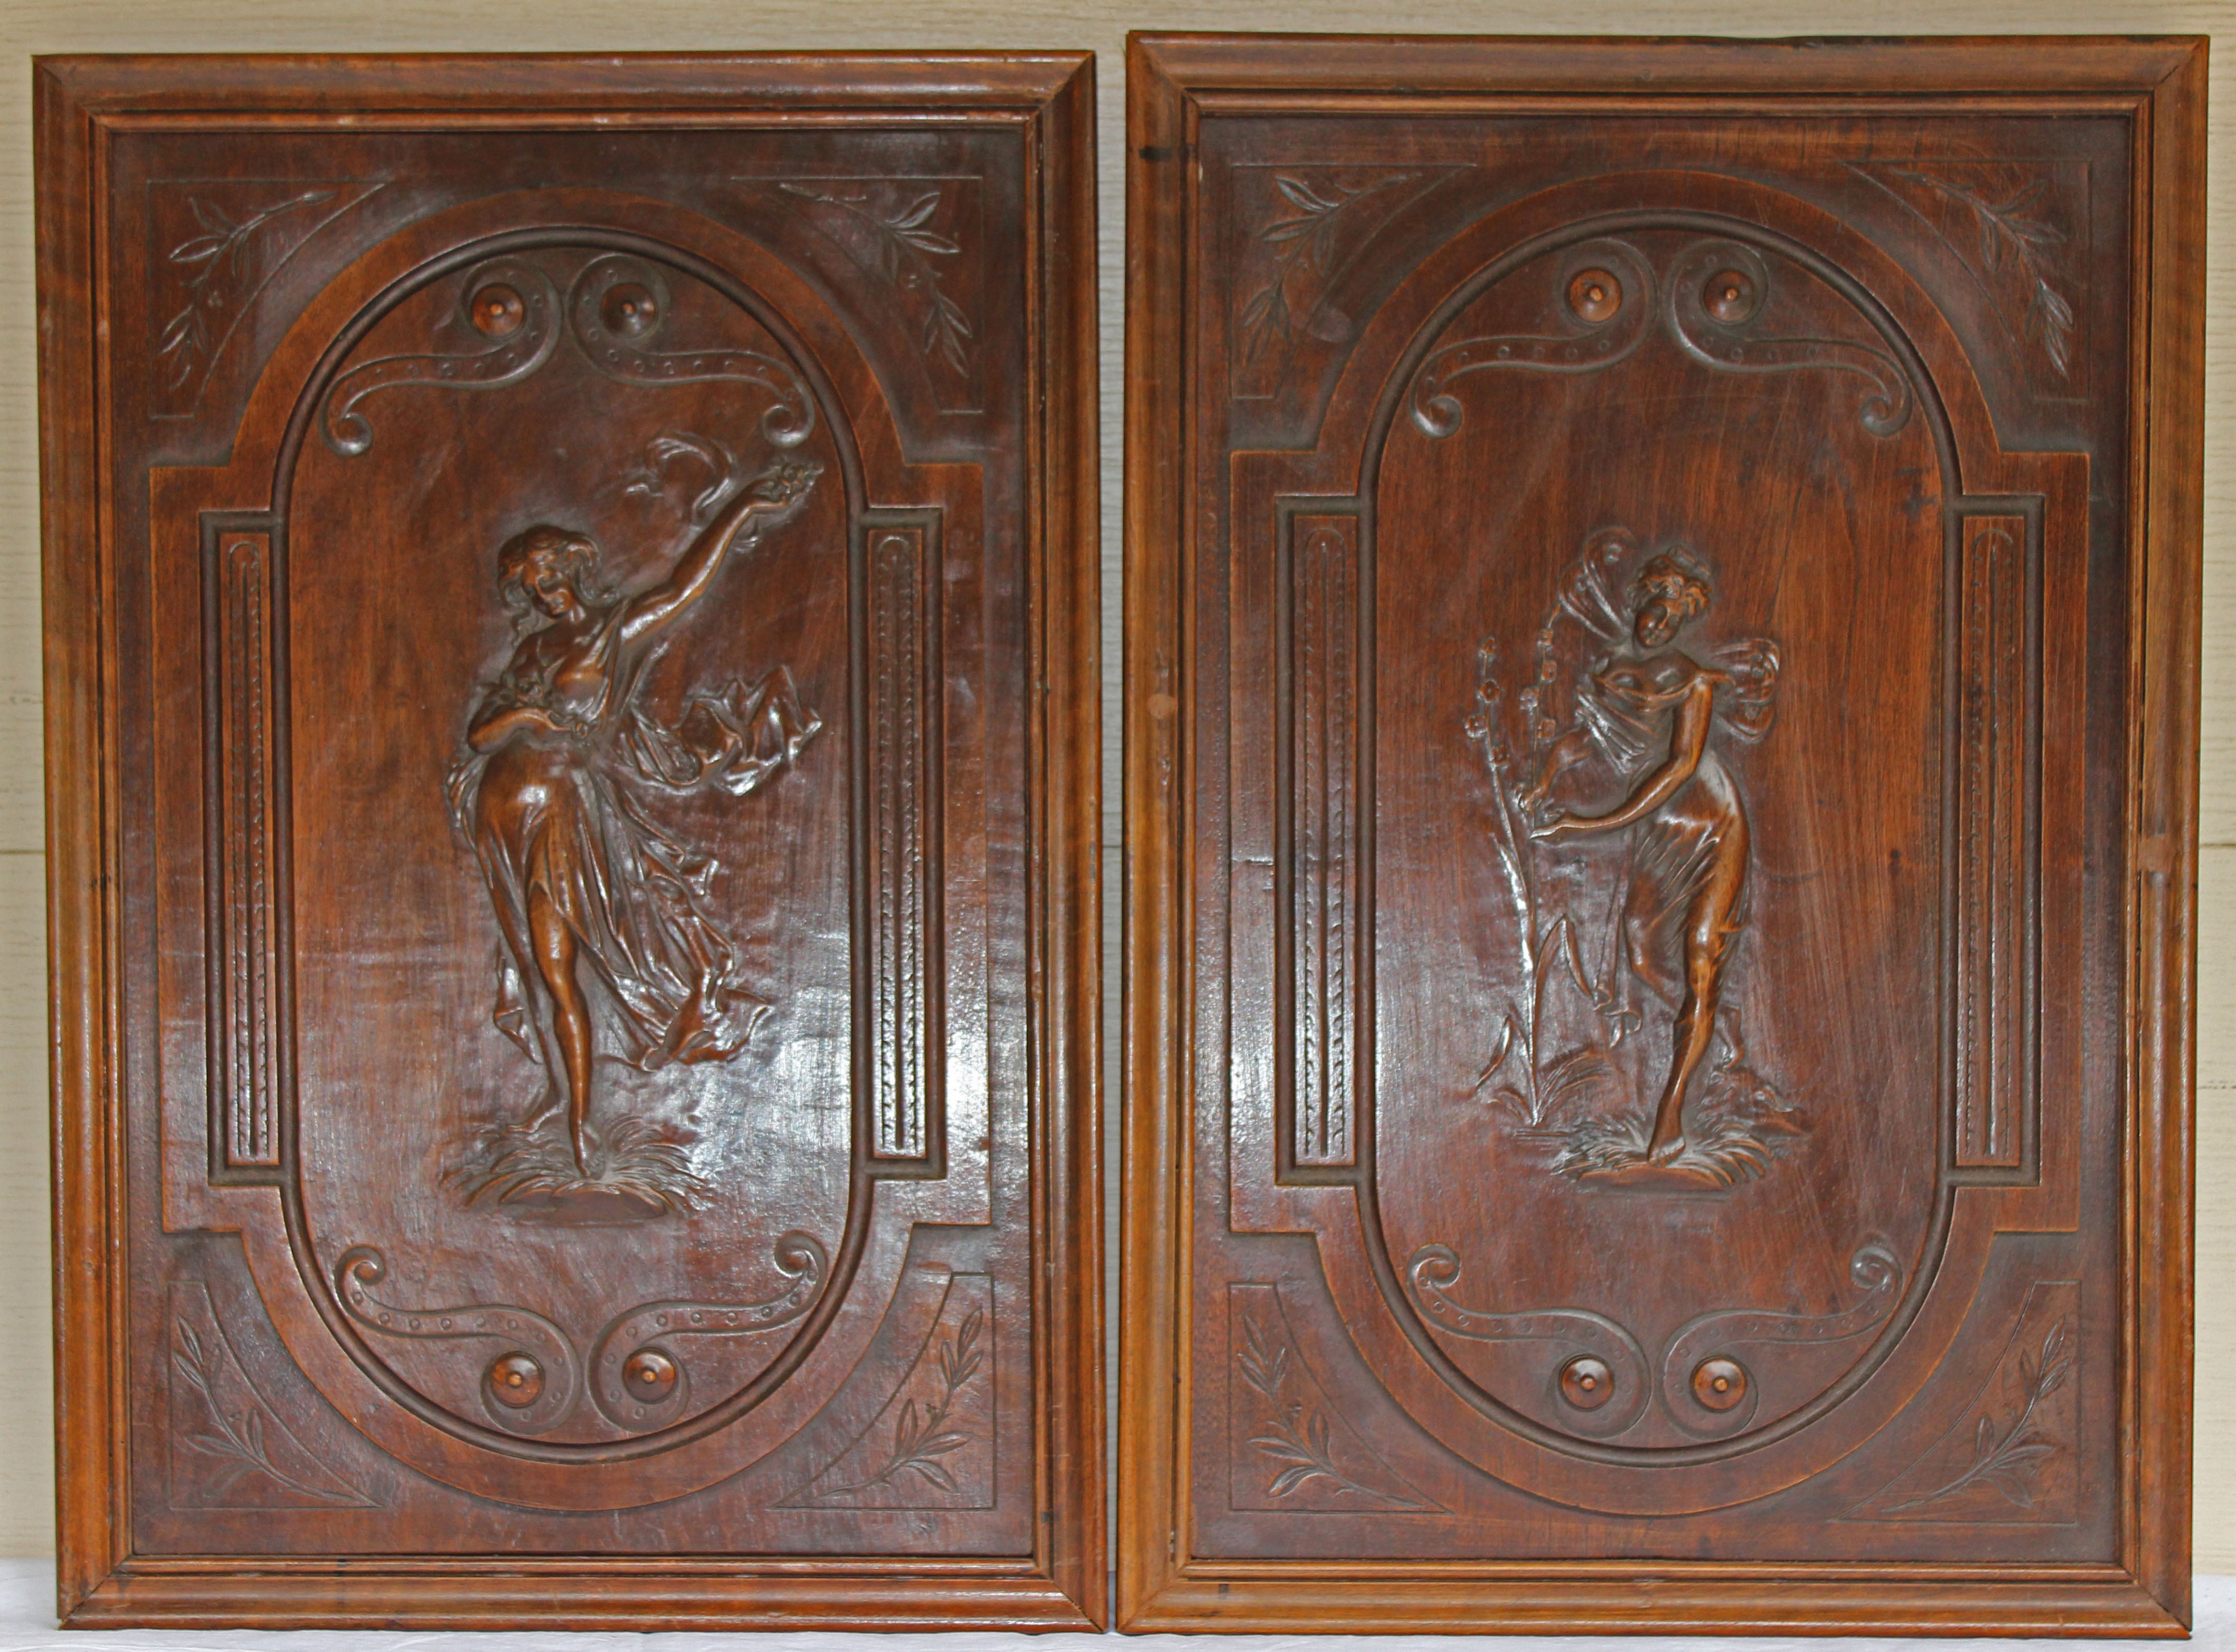 Pair of Art Nouveau Carved Wood Panels